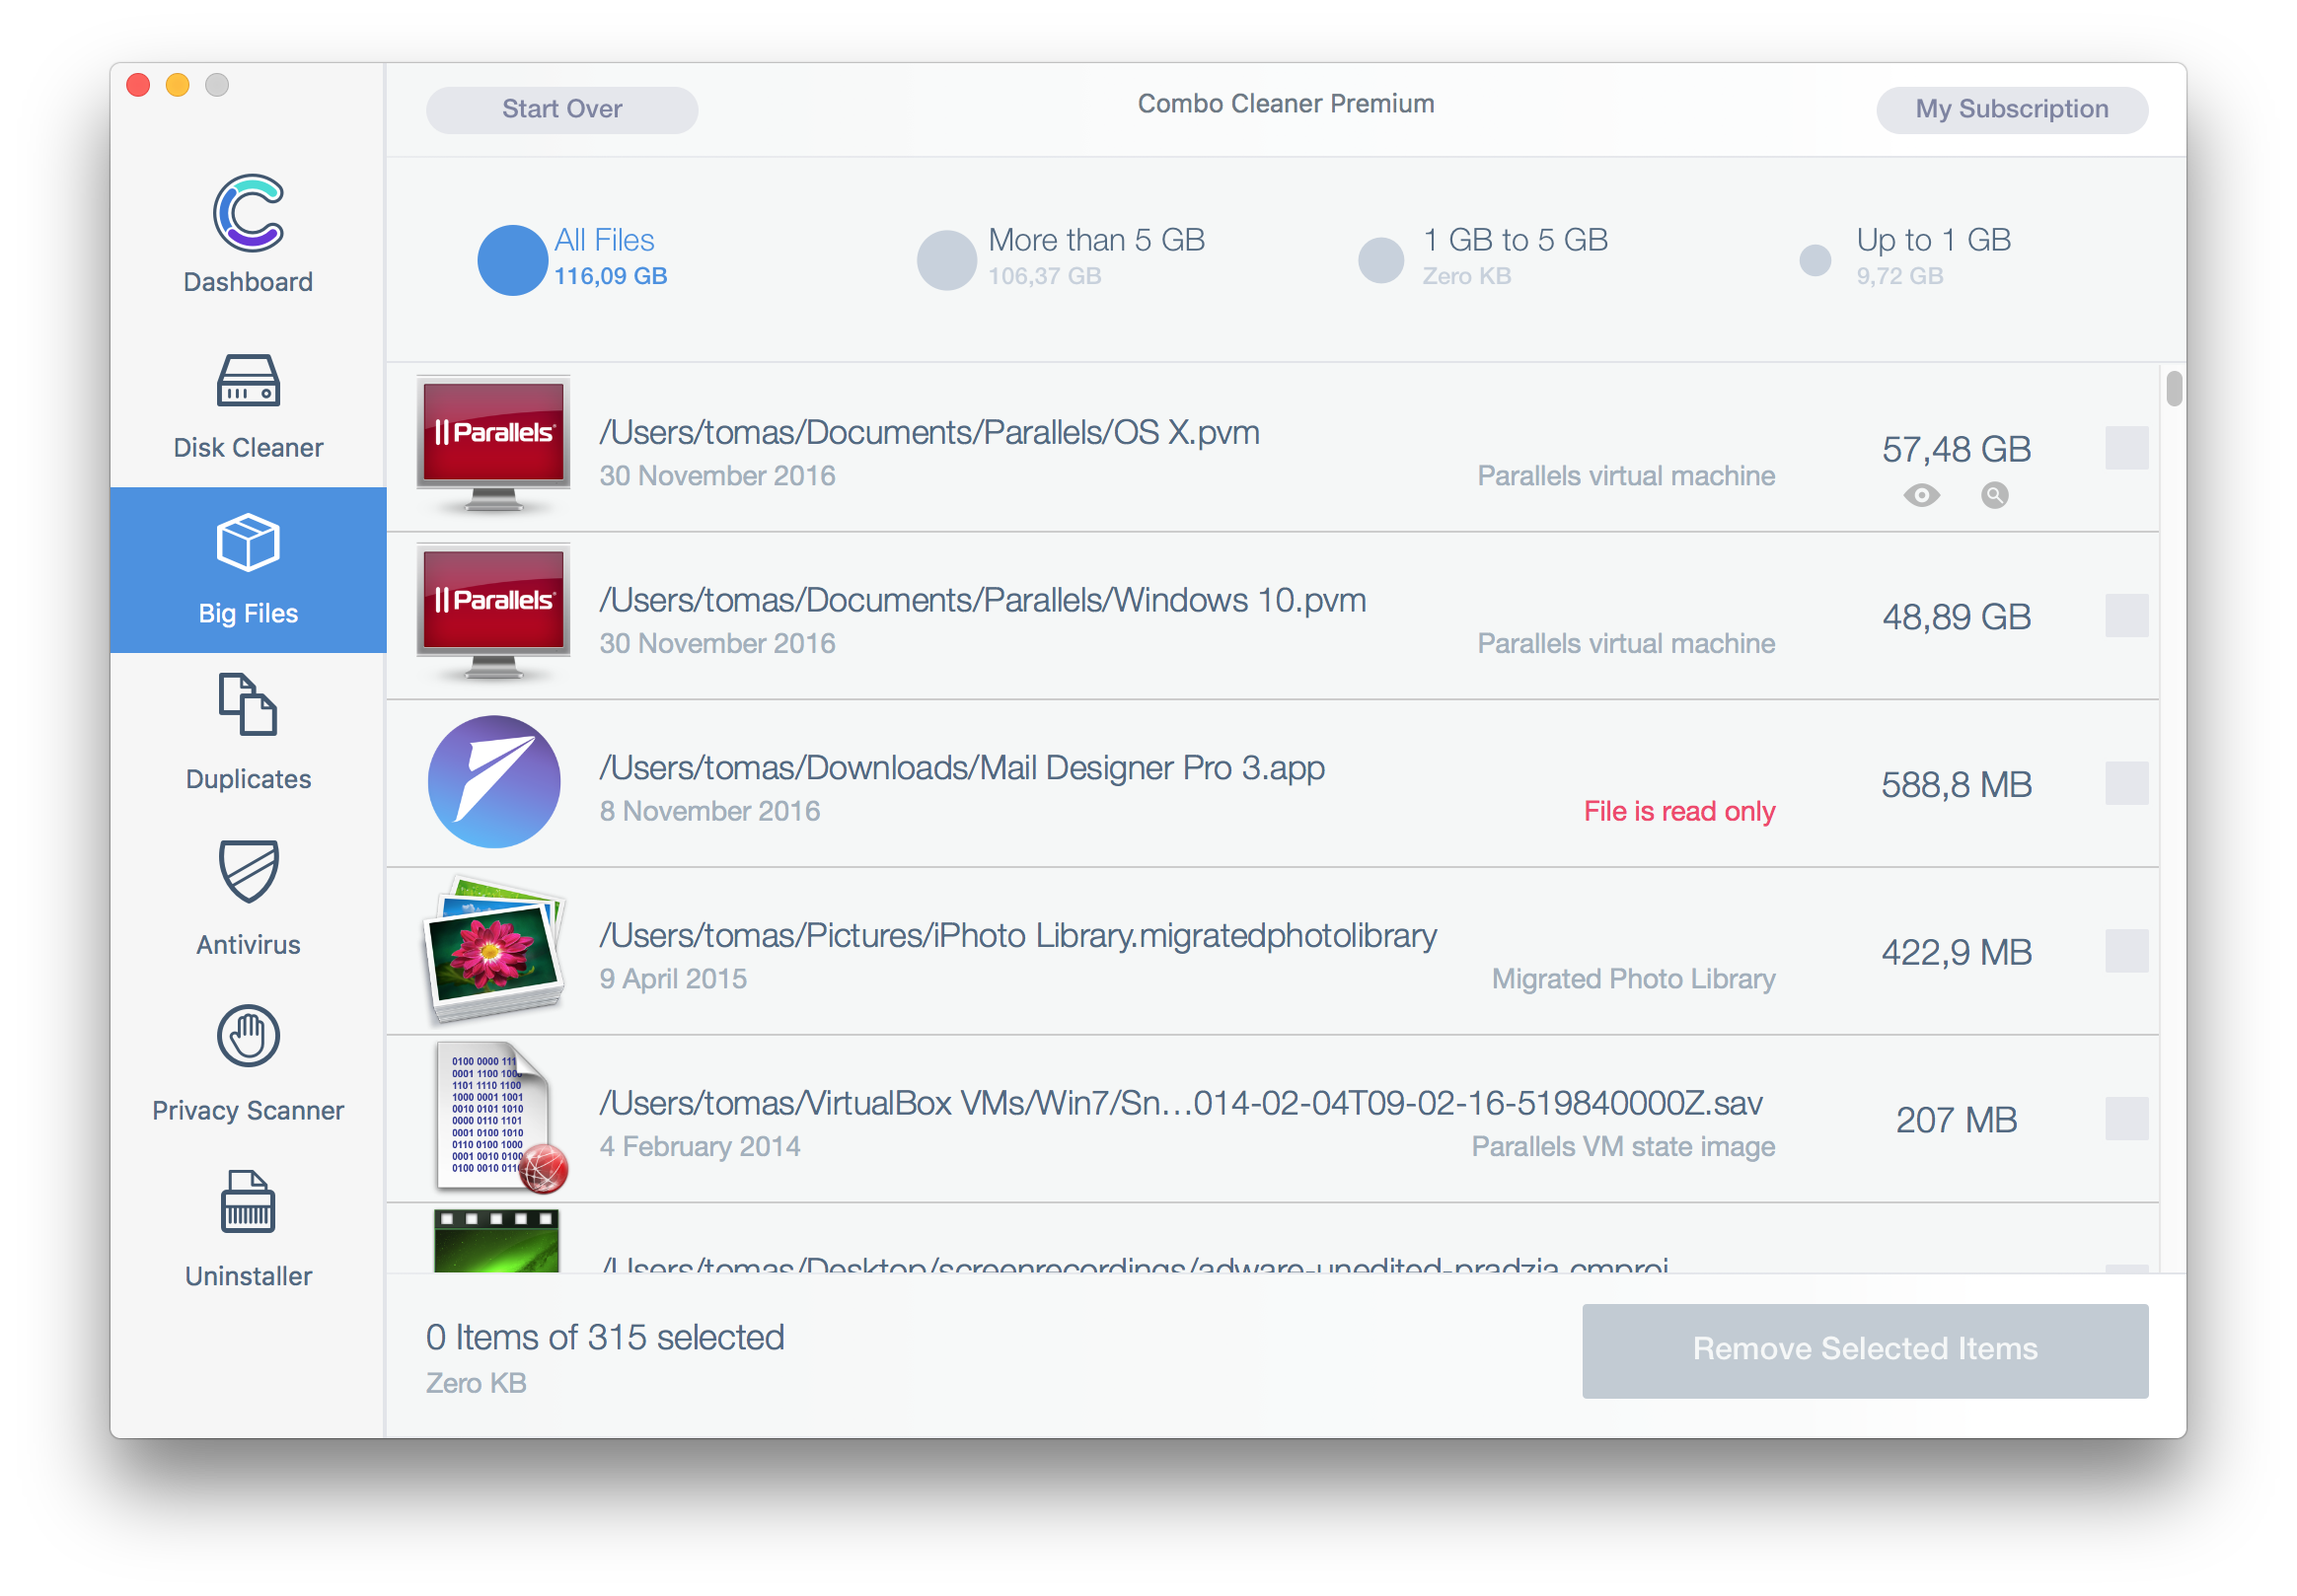 Download-Combo Cleaner Premium Mac Apps Download rar